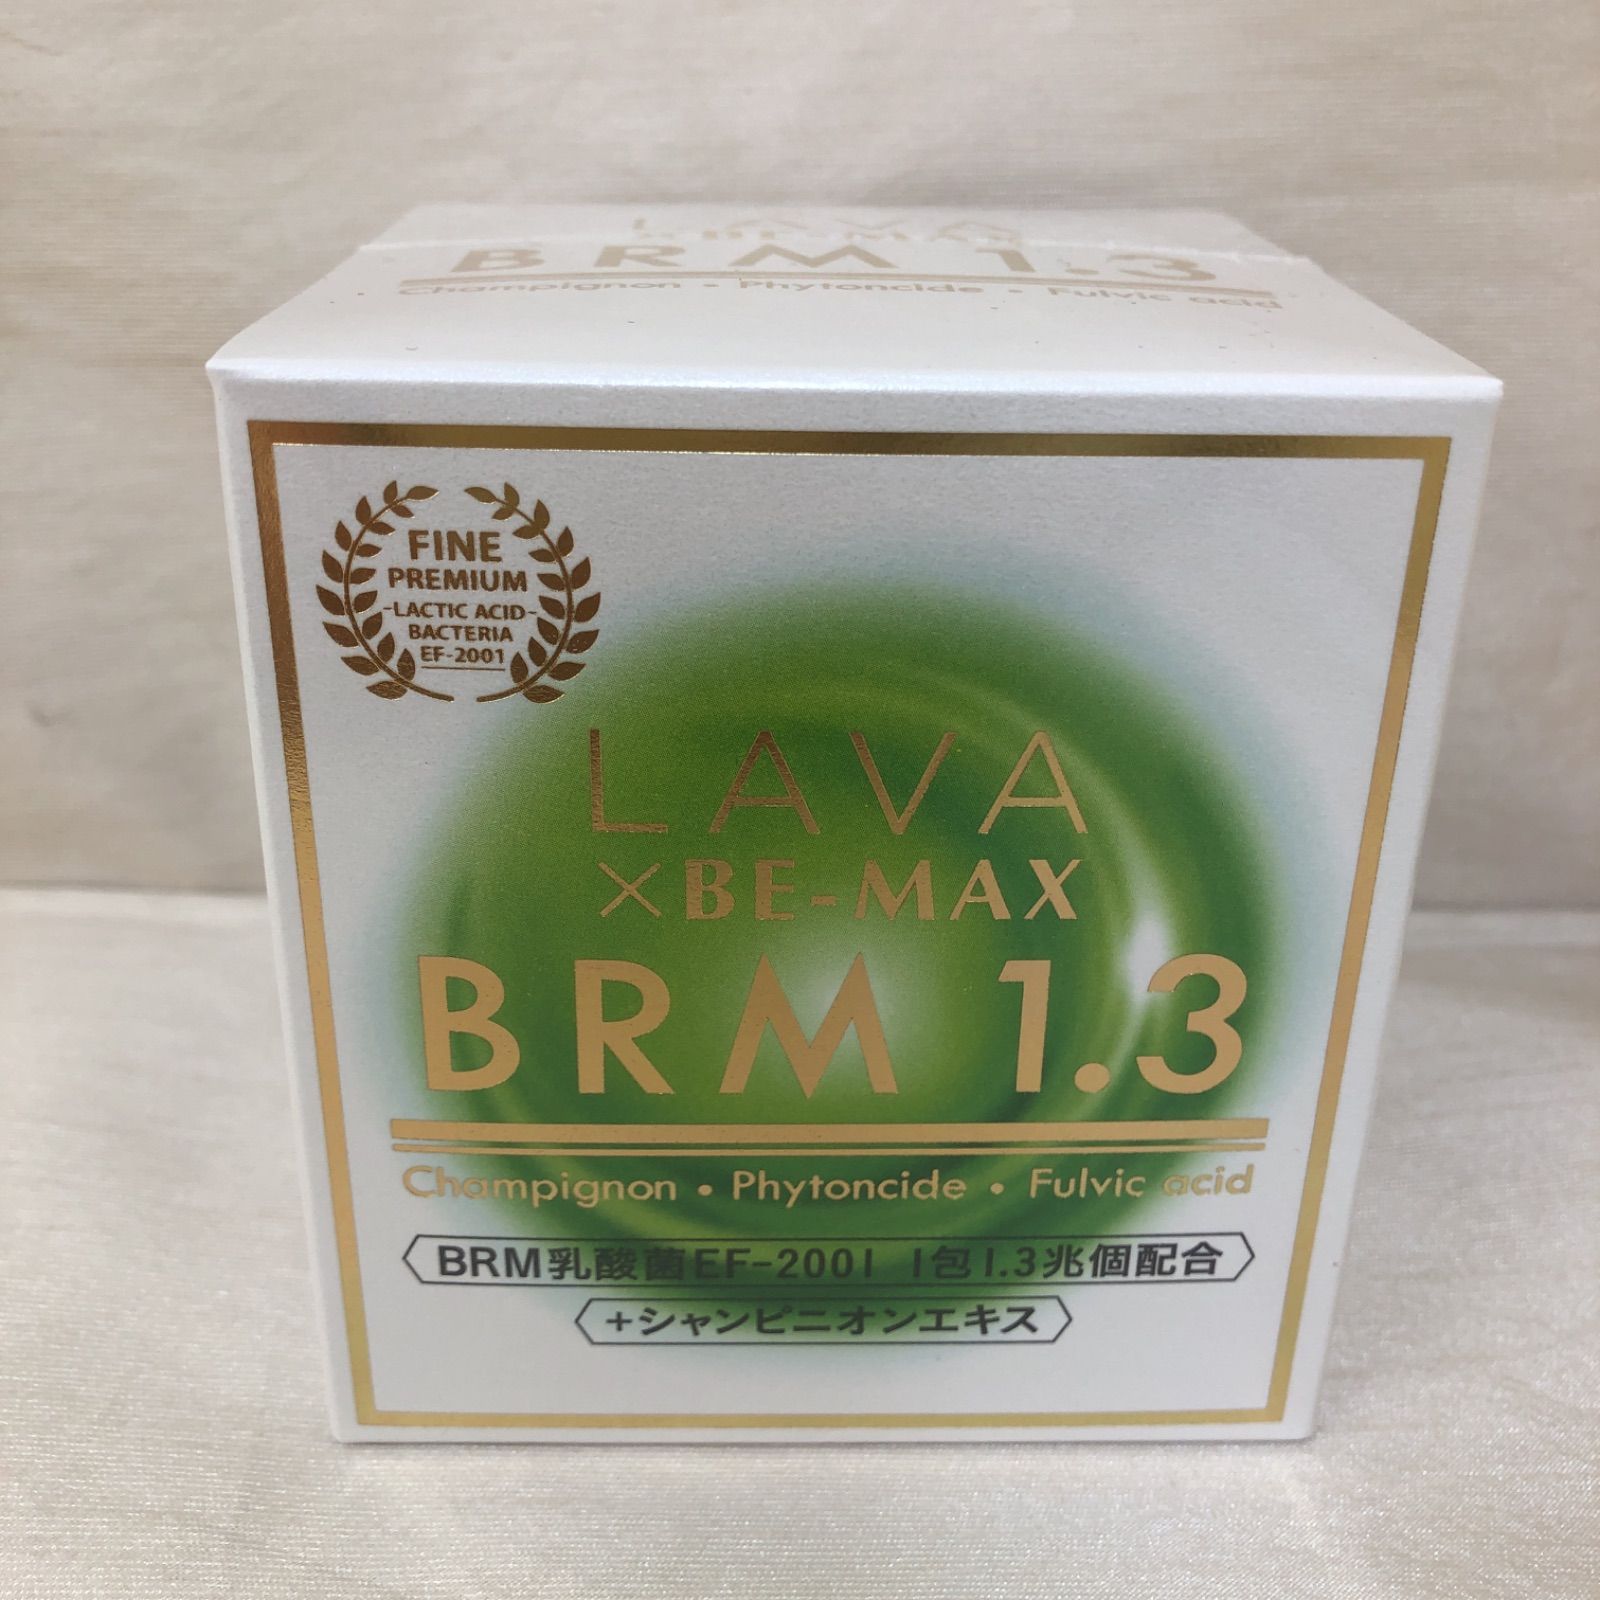 LAVA BRM1.3 1箱 50包-